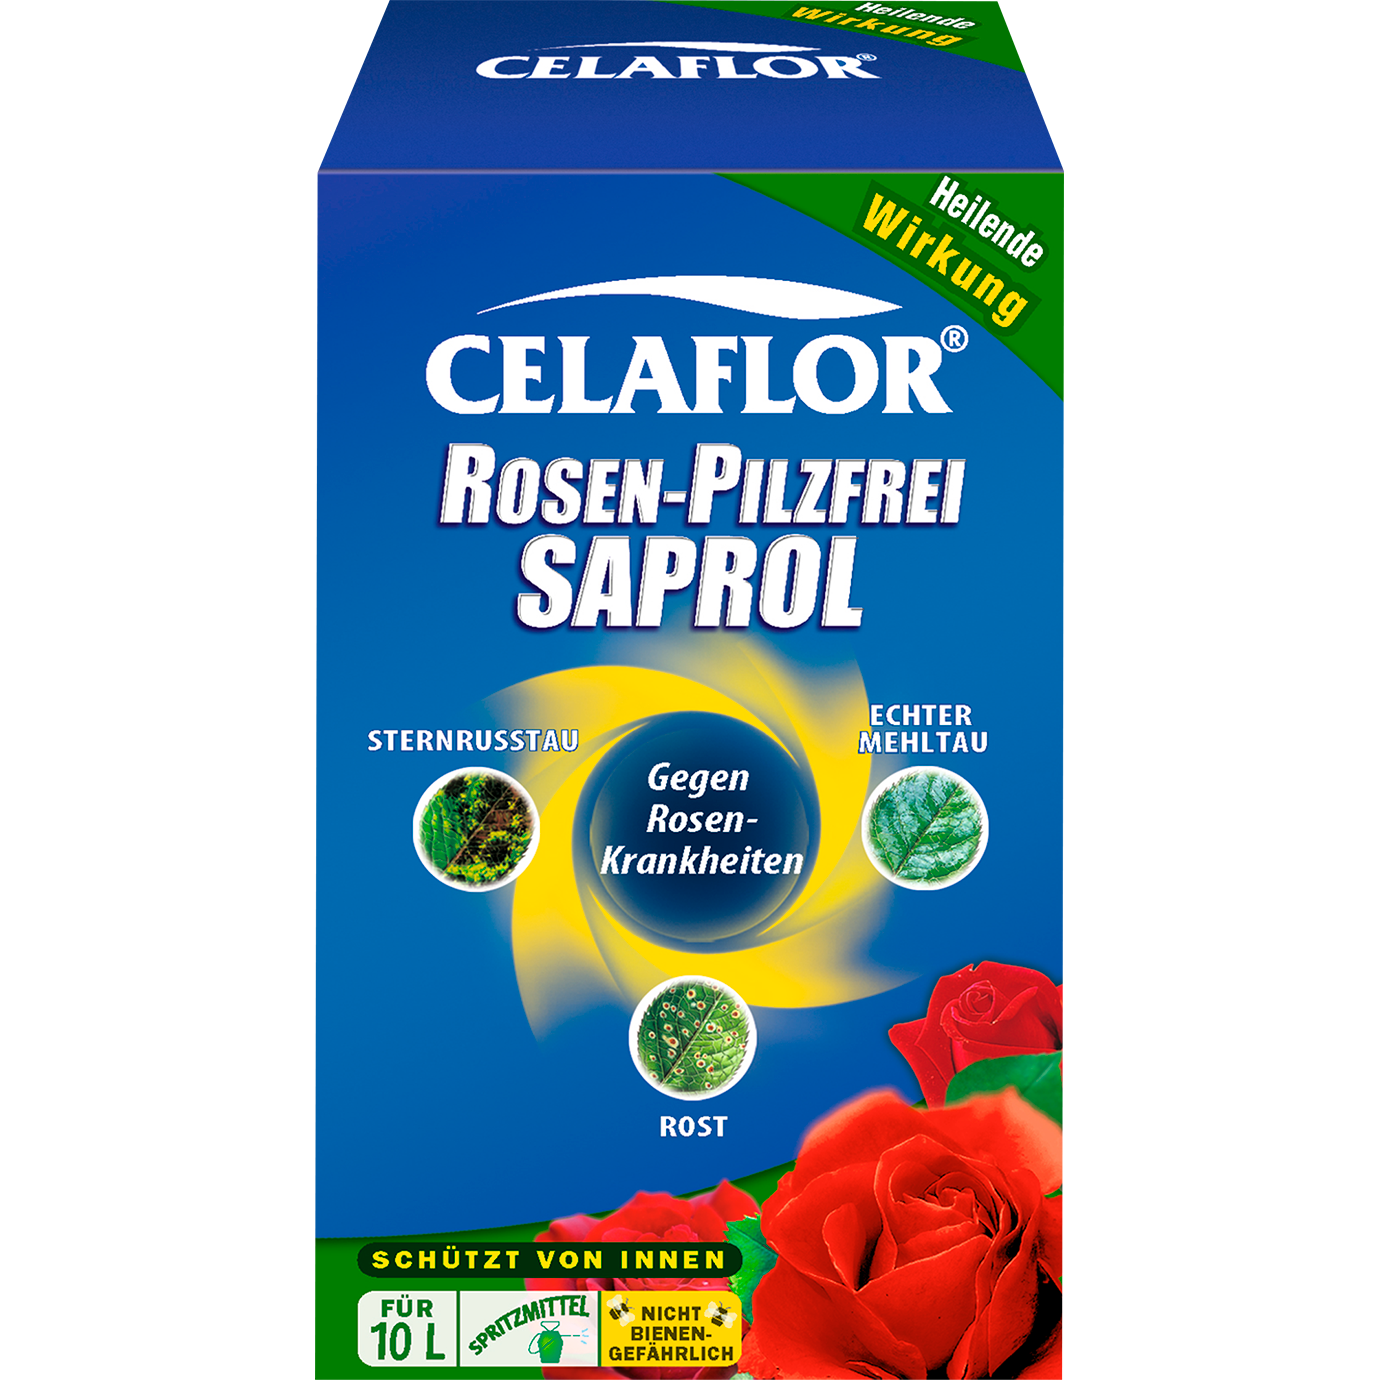 Celaflor® Rosen-Pilzfrei Saprol Konzentrat